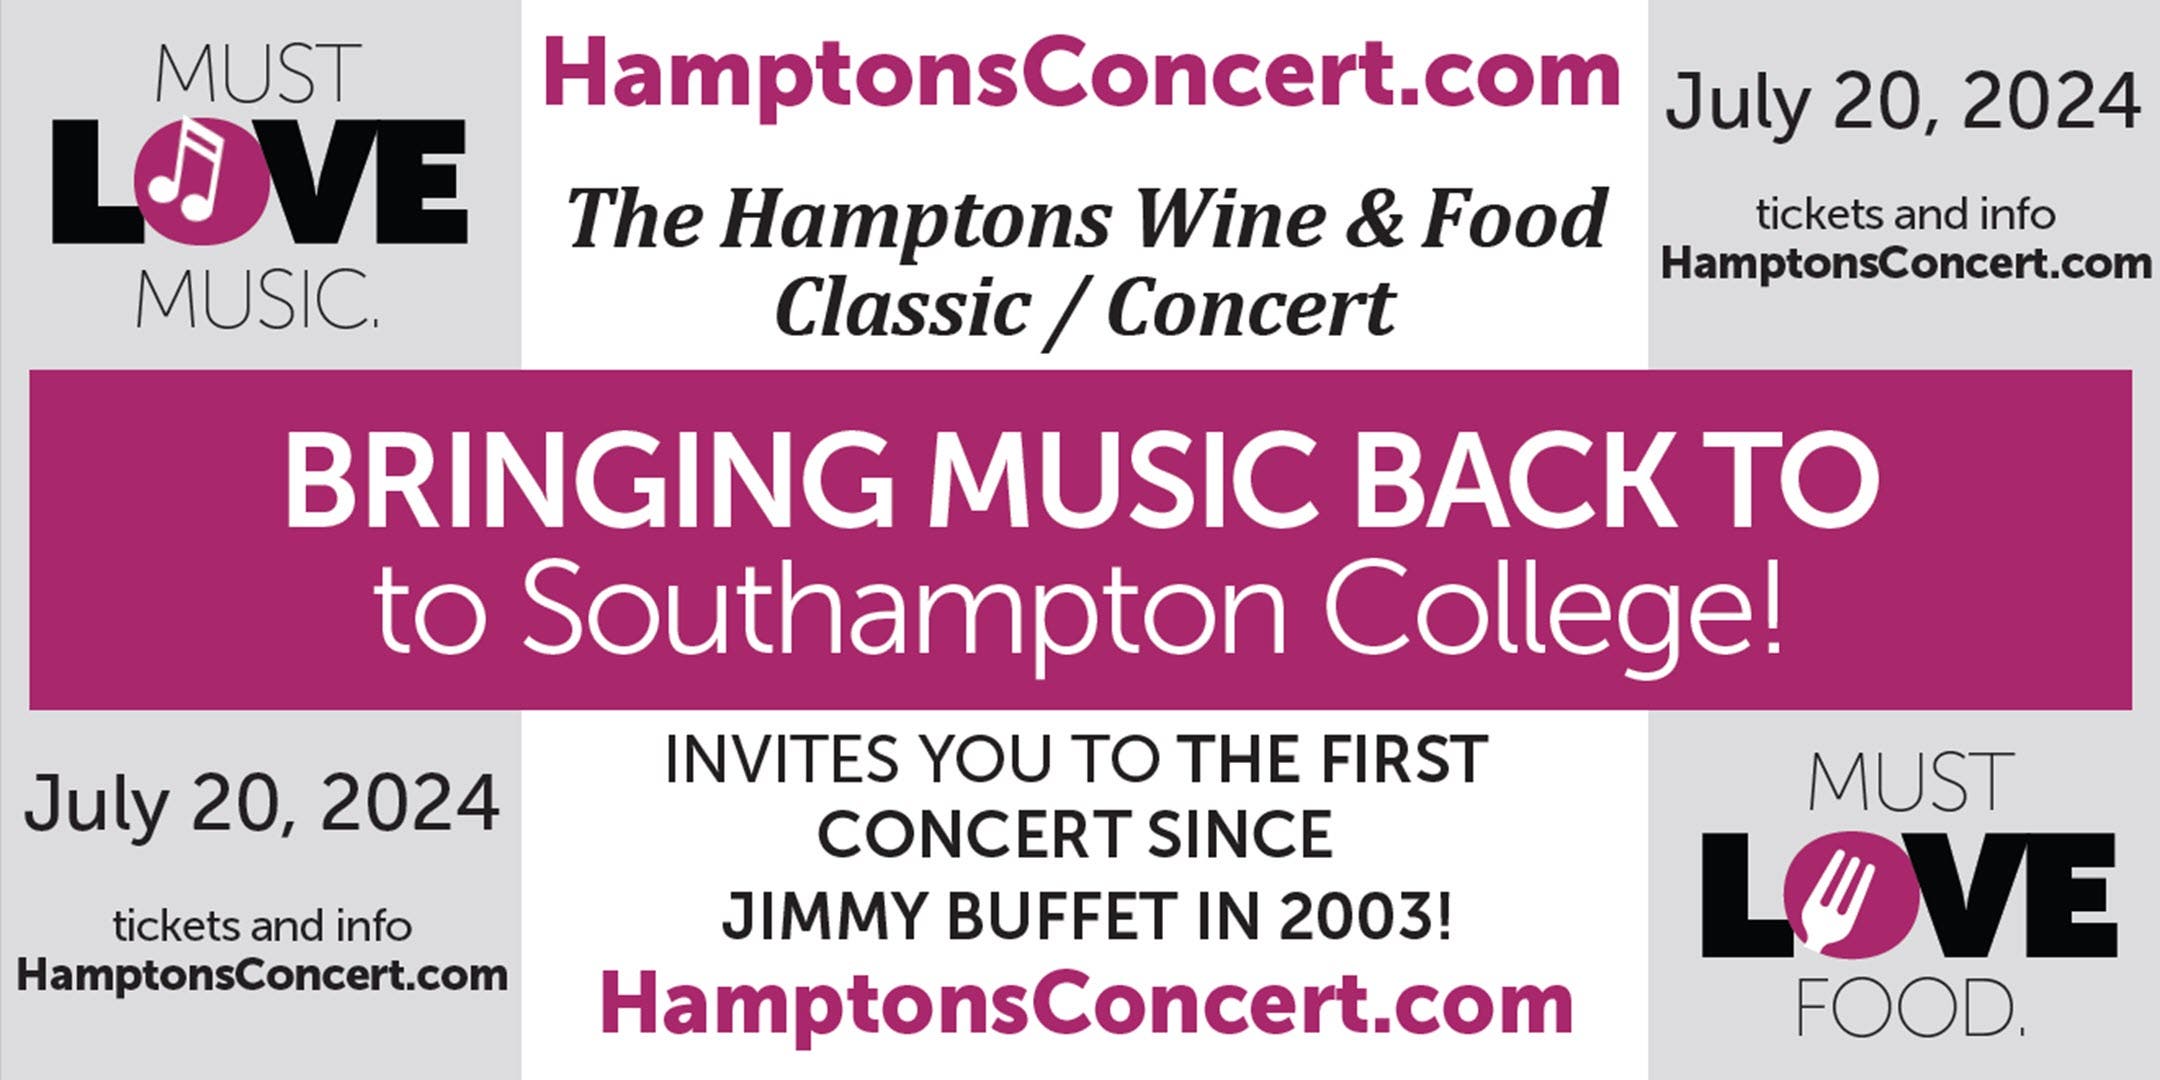 The Hamptons Wine & Food Classic / Concert